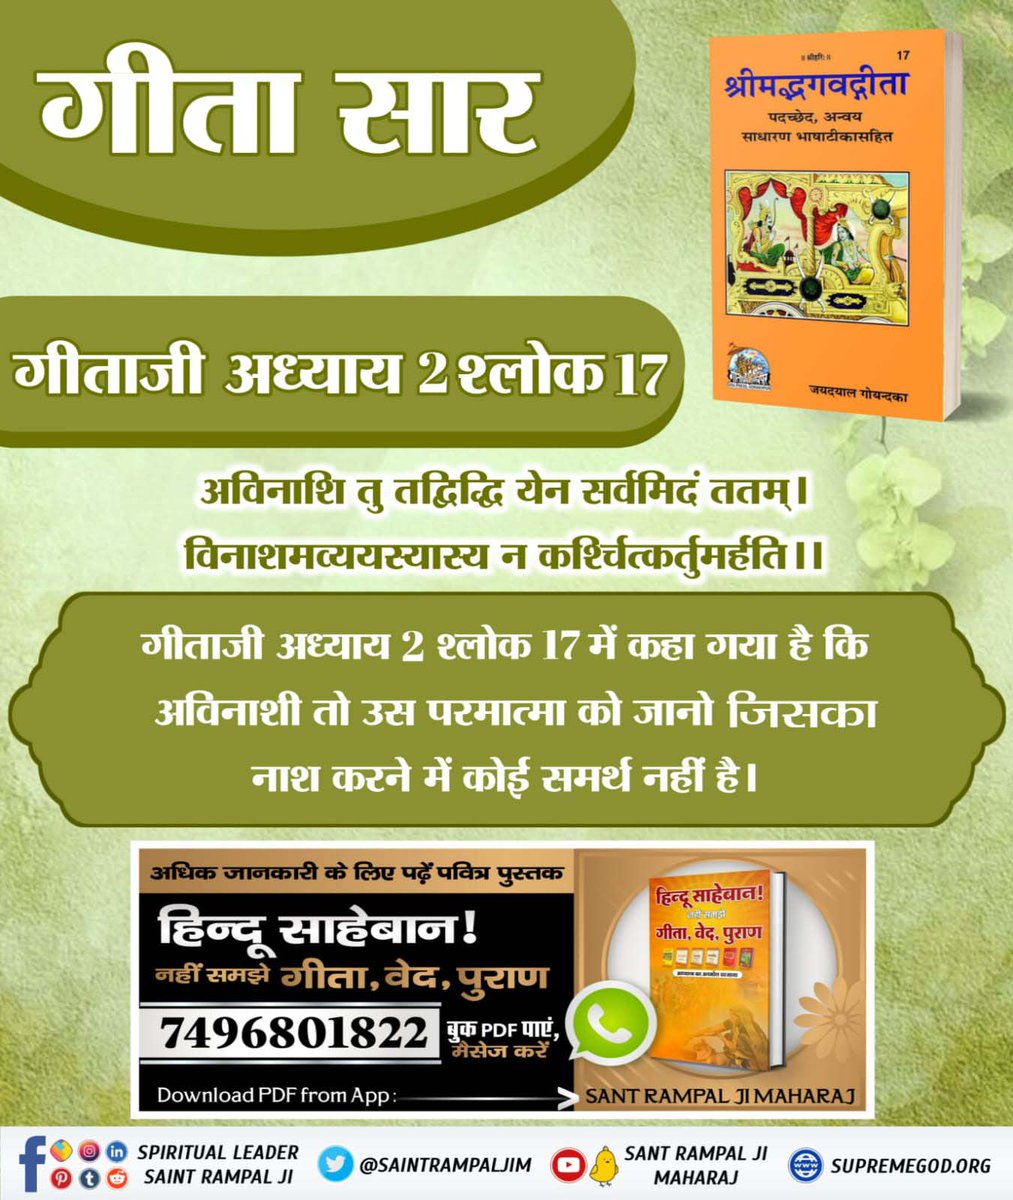 गीता सार #GodMorningThursday Gita ji Chapter 2 Verse 17 More information Read Spiritual Book ' Hindu saheban nahi samjhe Gita Ved Puran '